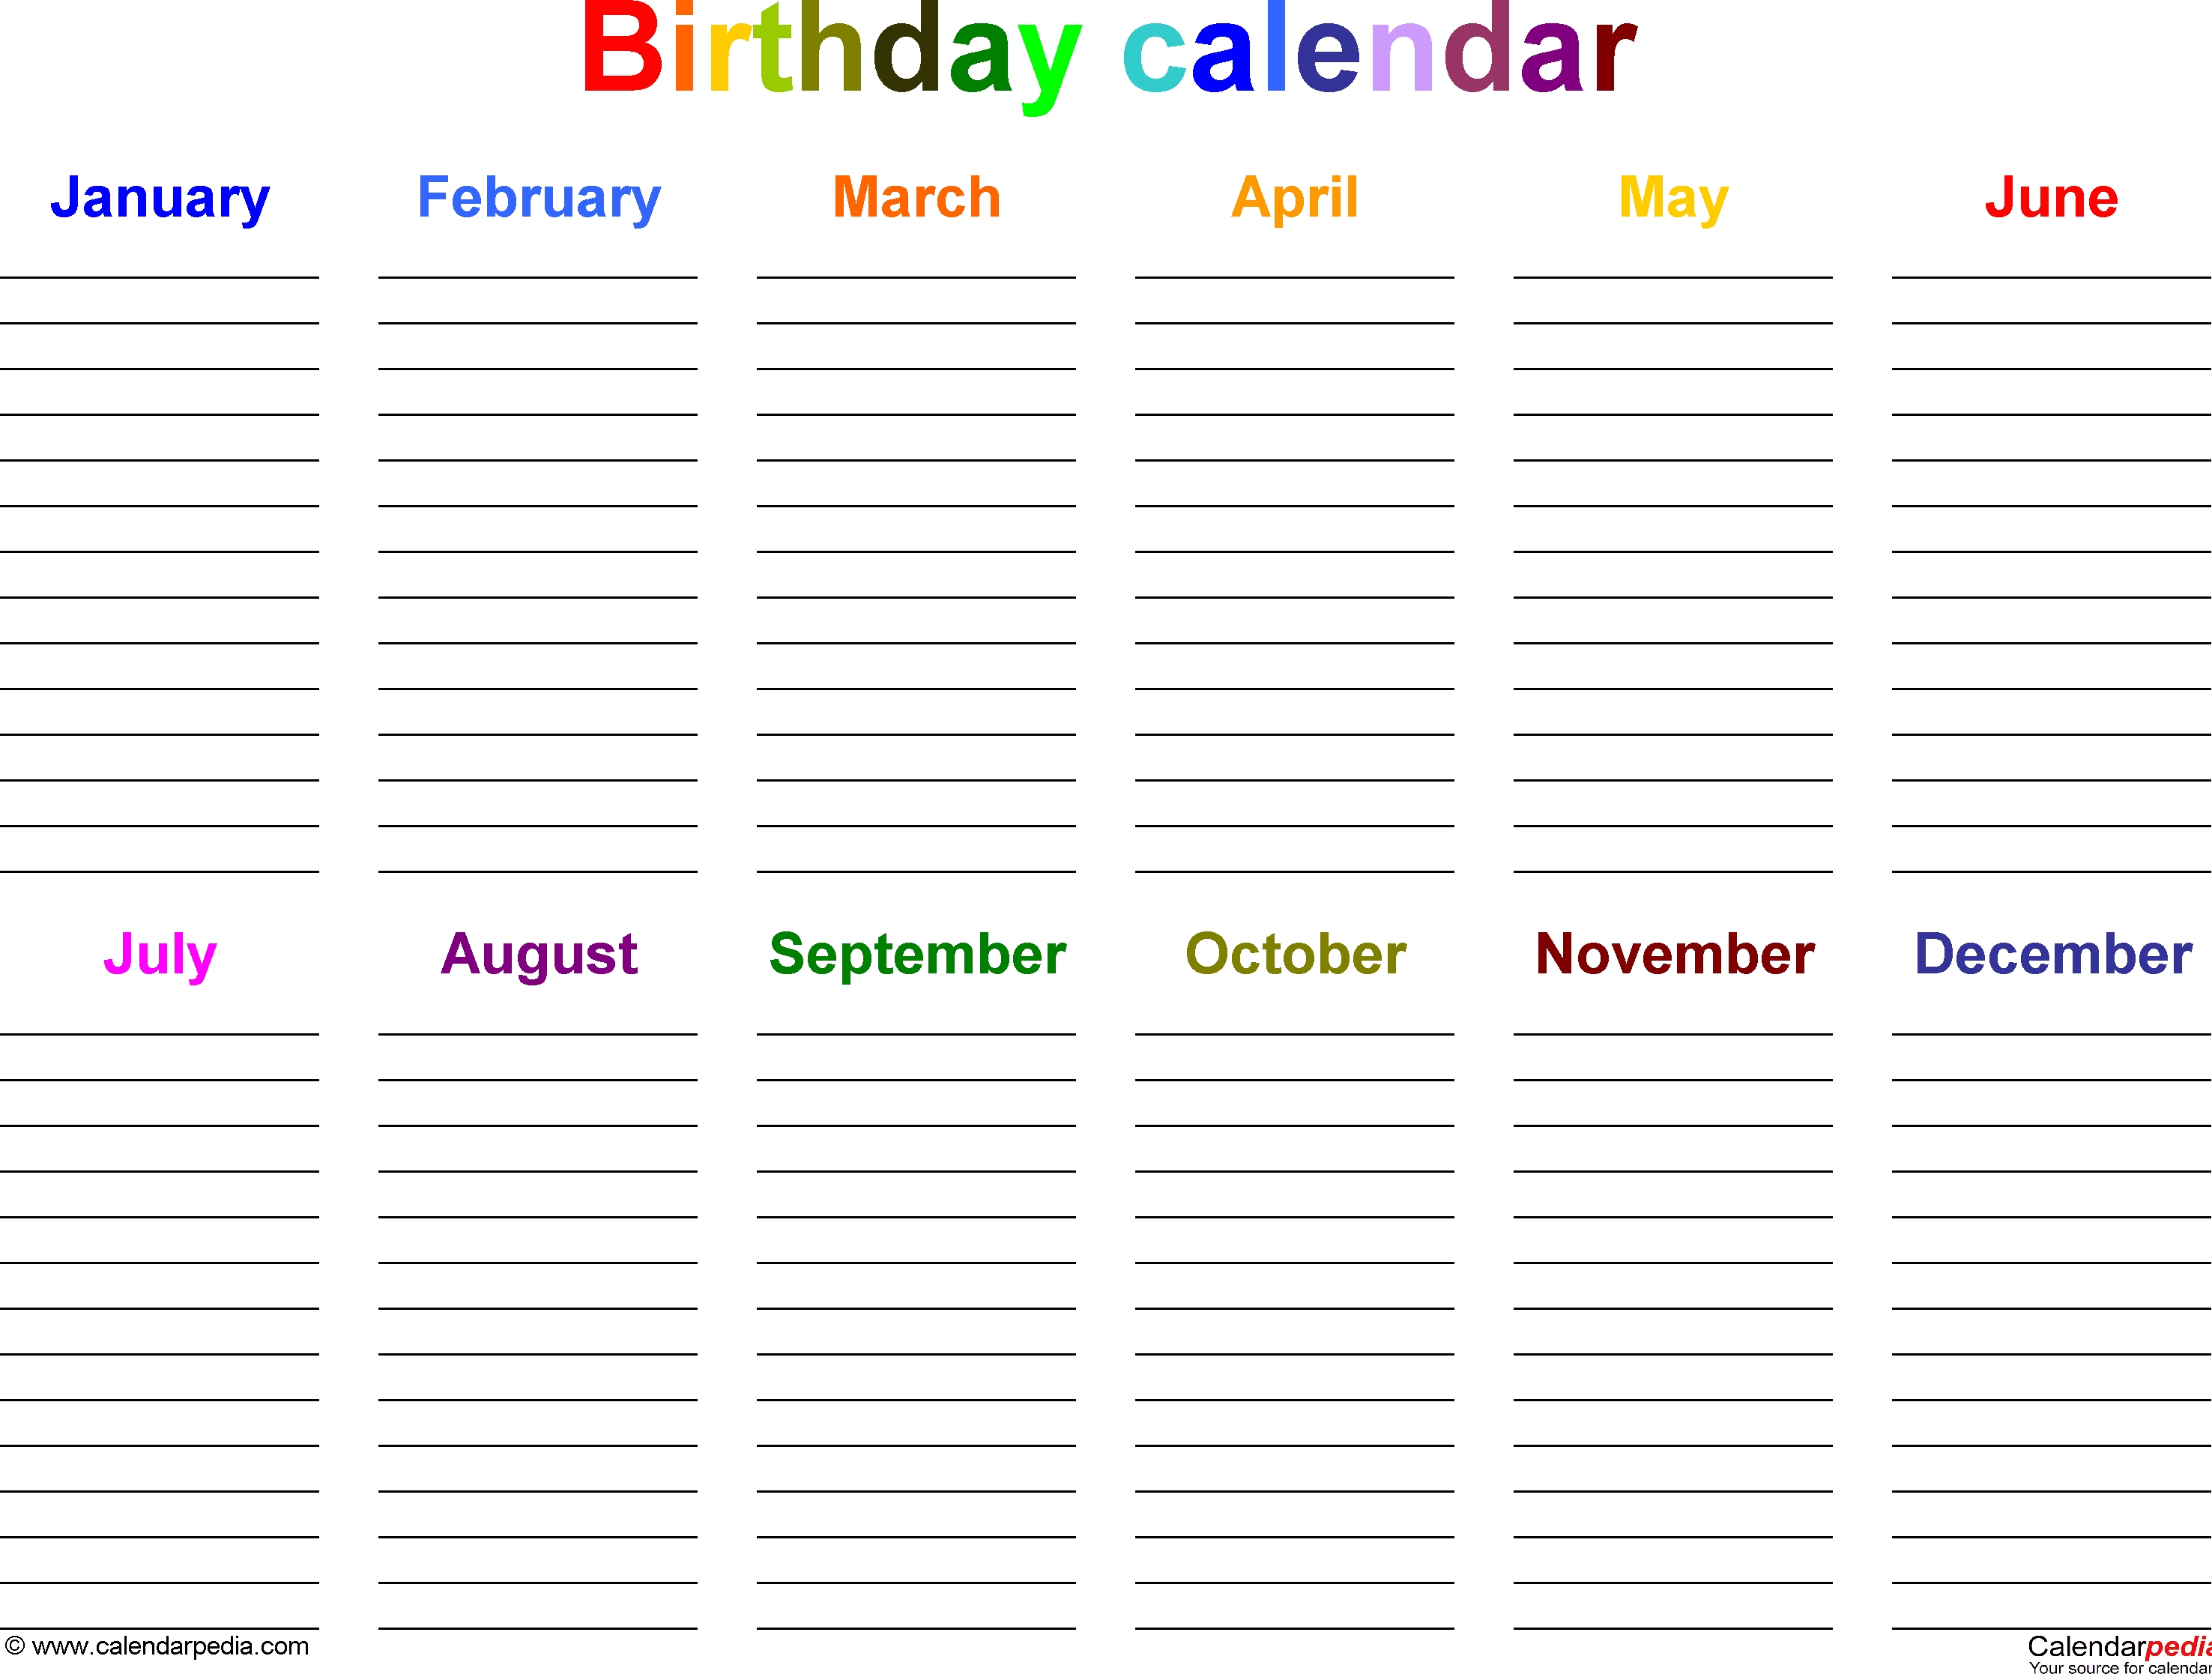 12 month birthday calendar free printable 49